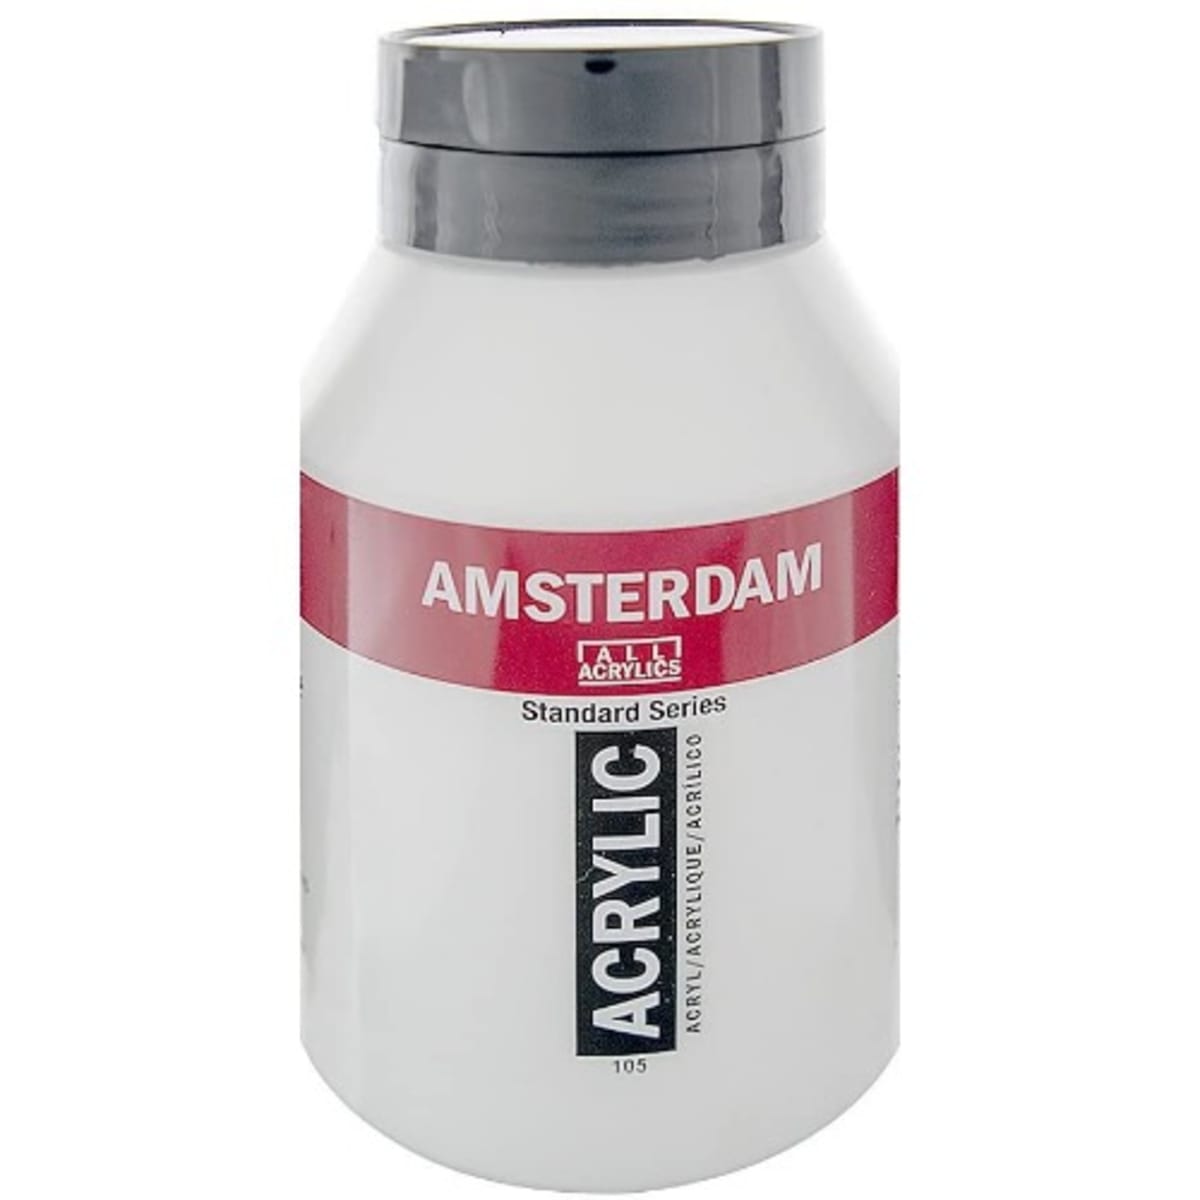 Amsterdam Standard Series Acrylic Paint, 1000ml, Titanium White